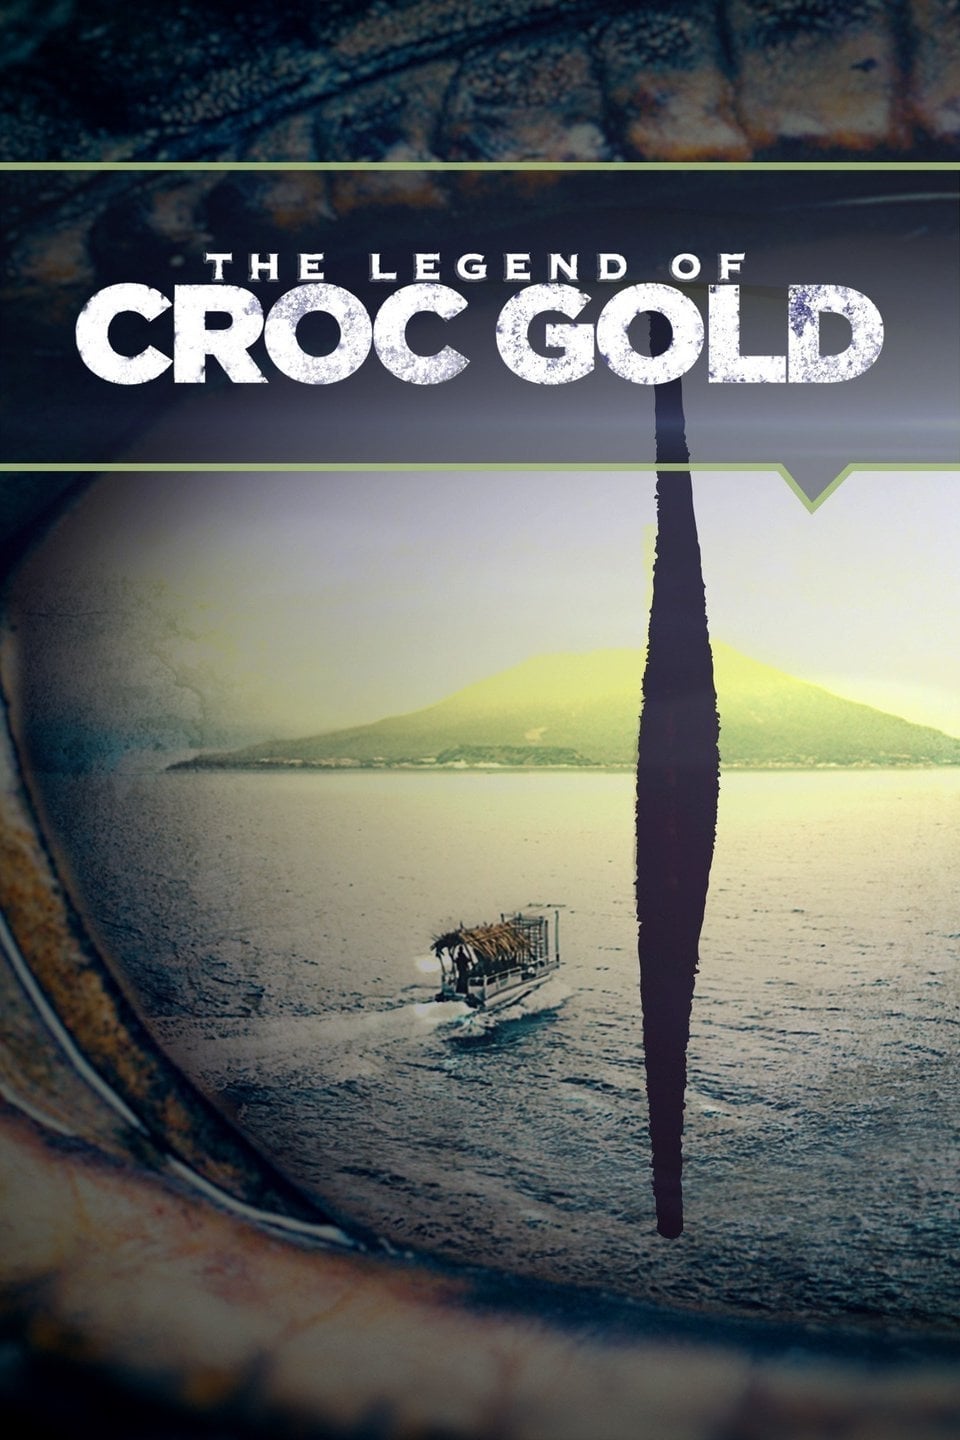 The legend of croc gold